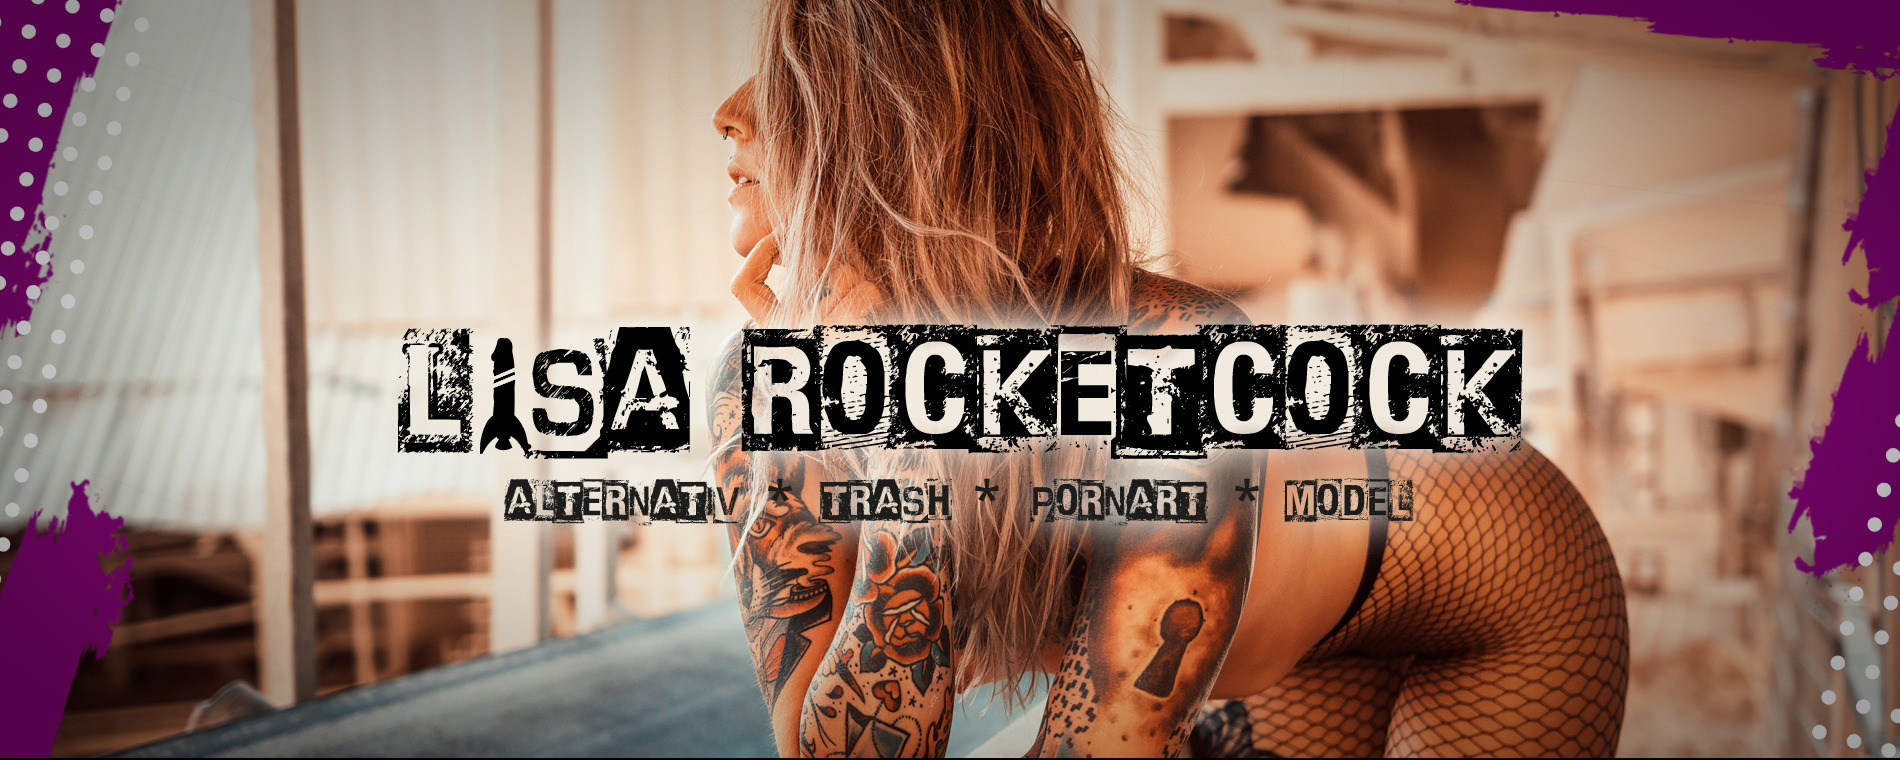 Lisa rocket cock